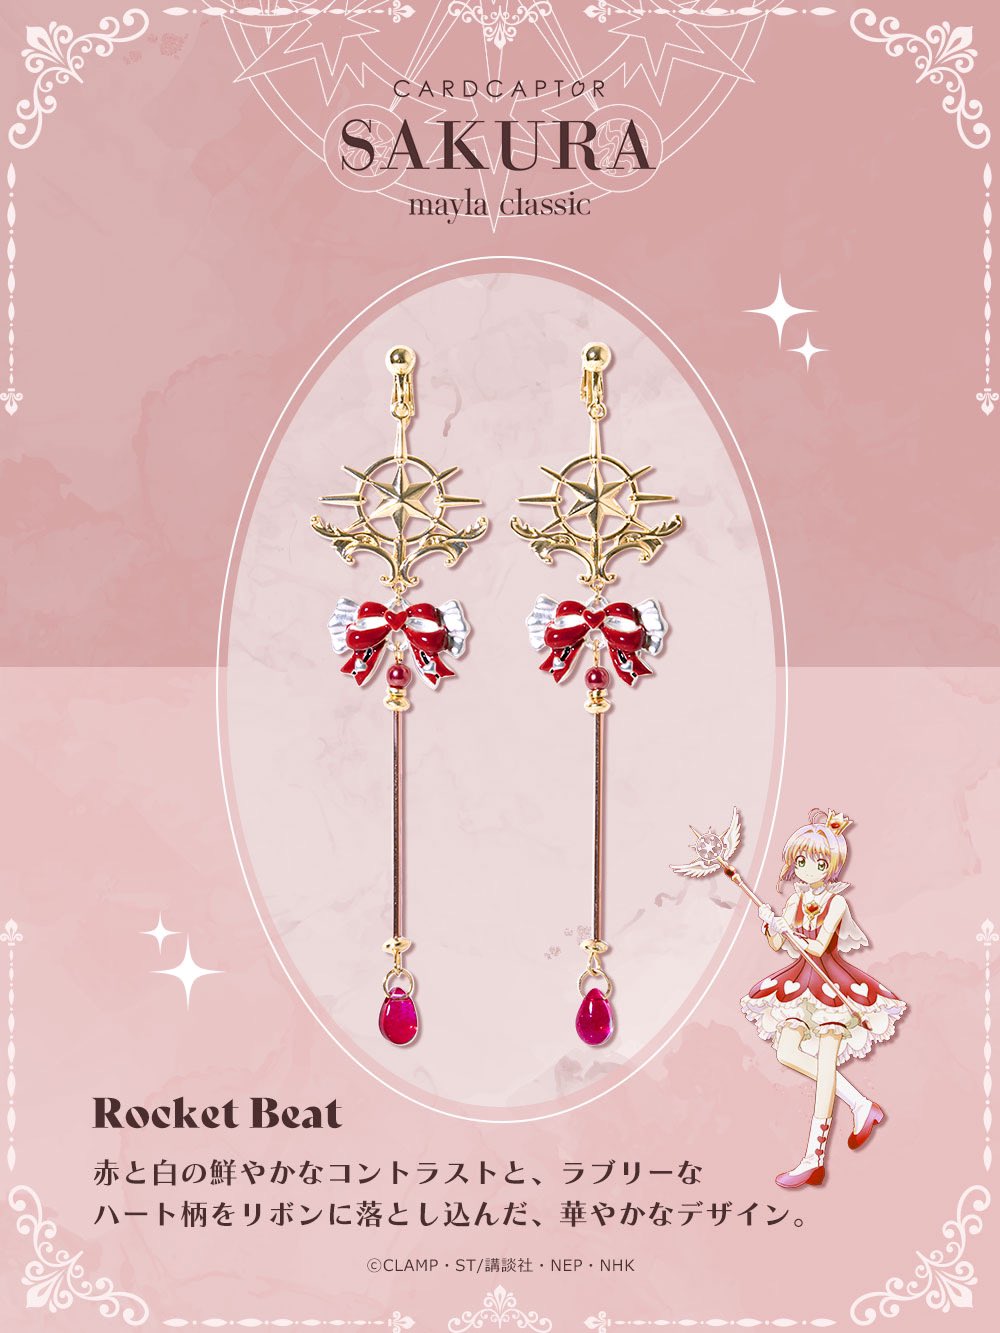 Second collaboration Cardcaptor Sakura x Mayla Classic "Rocket Beat"